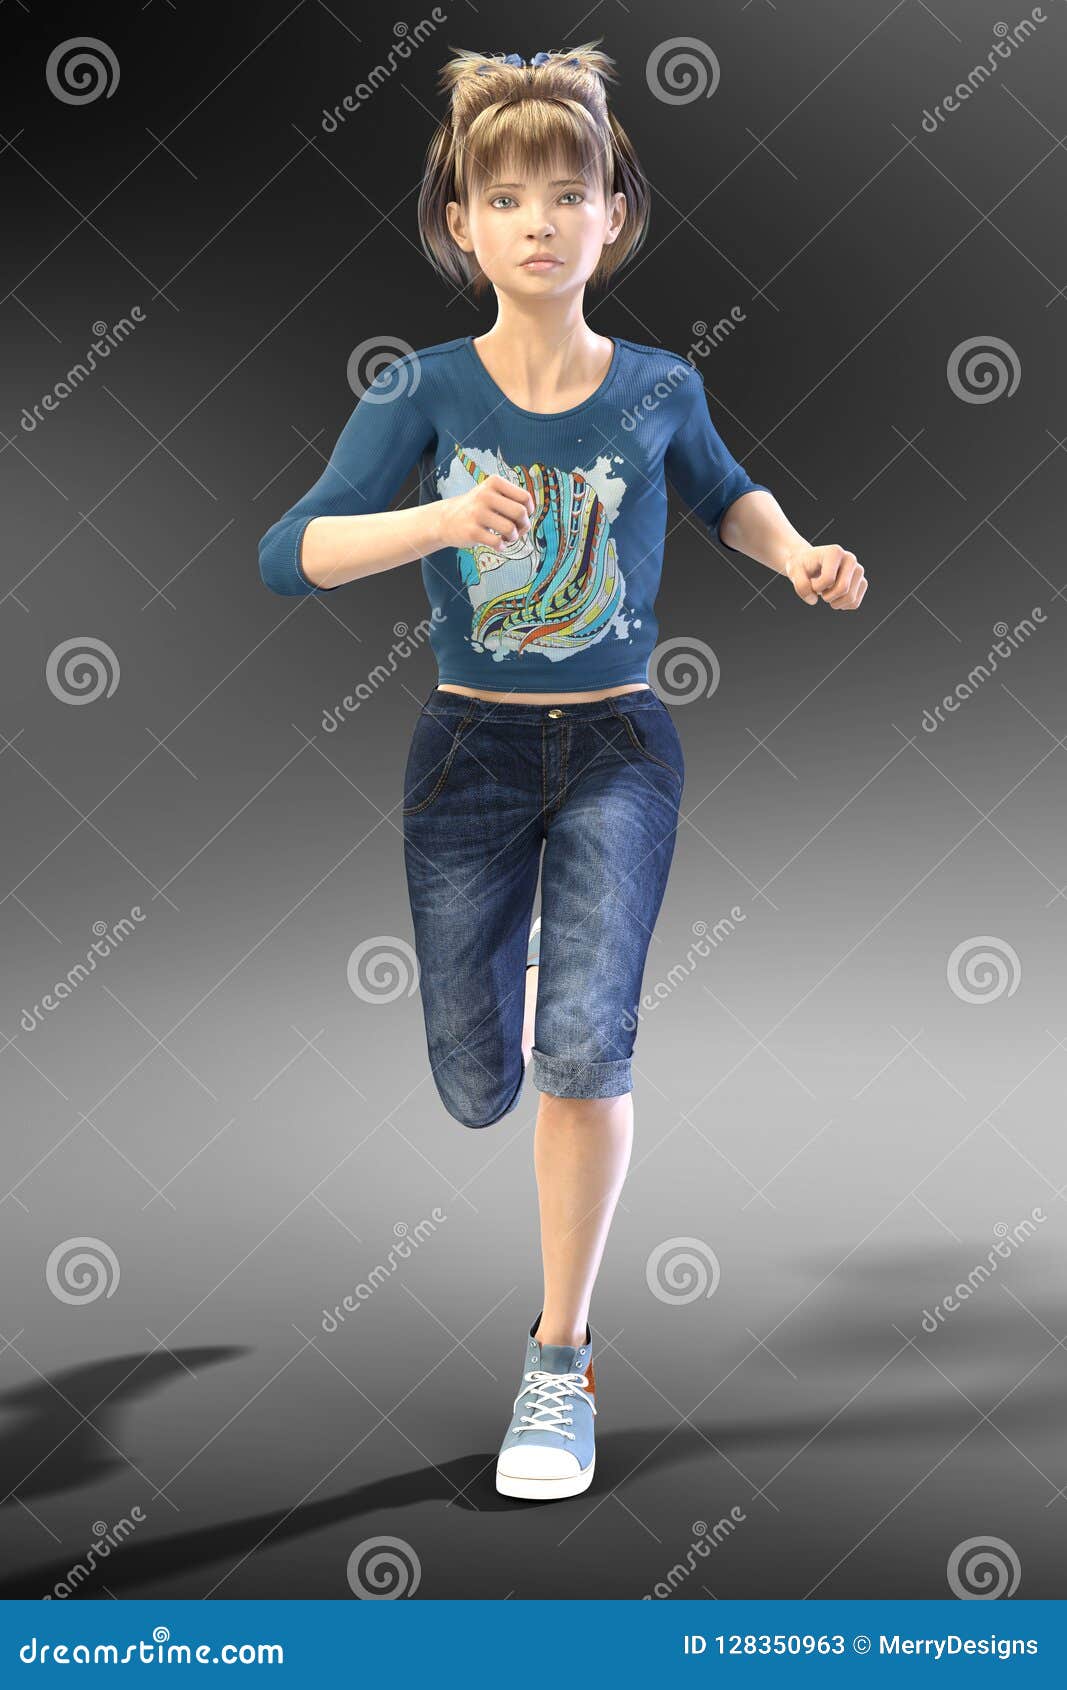 young teen child cgi character running towards camera